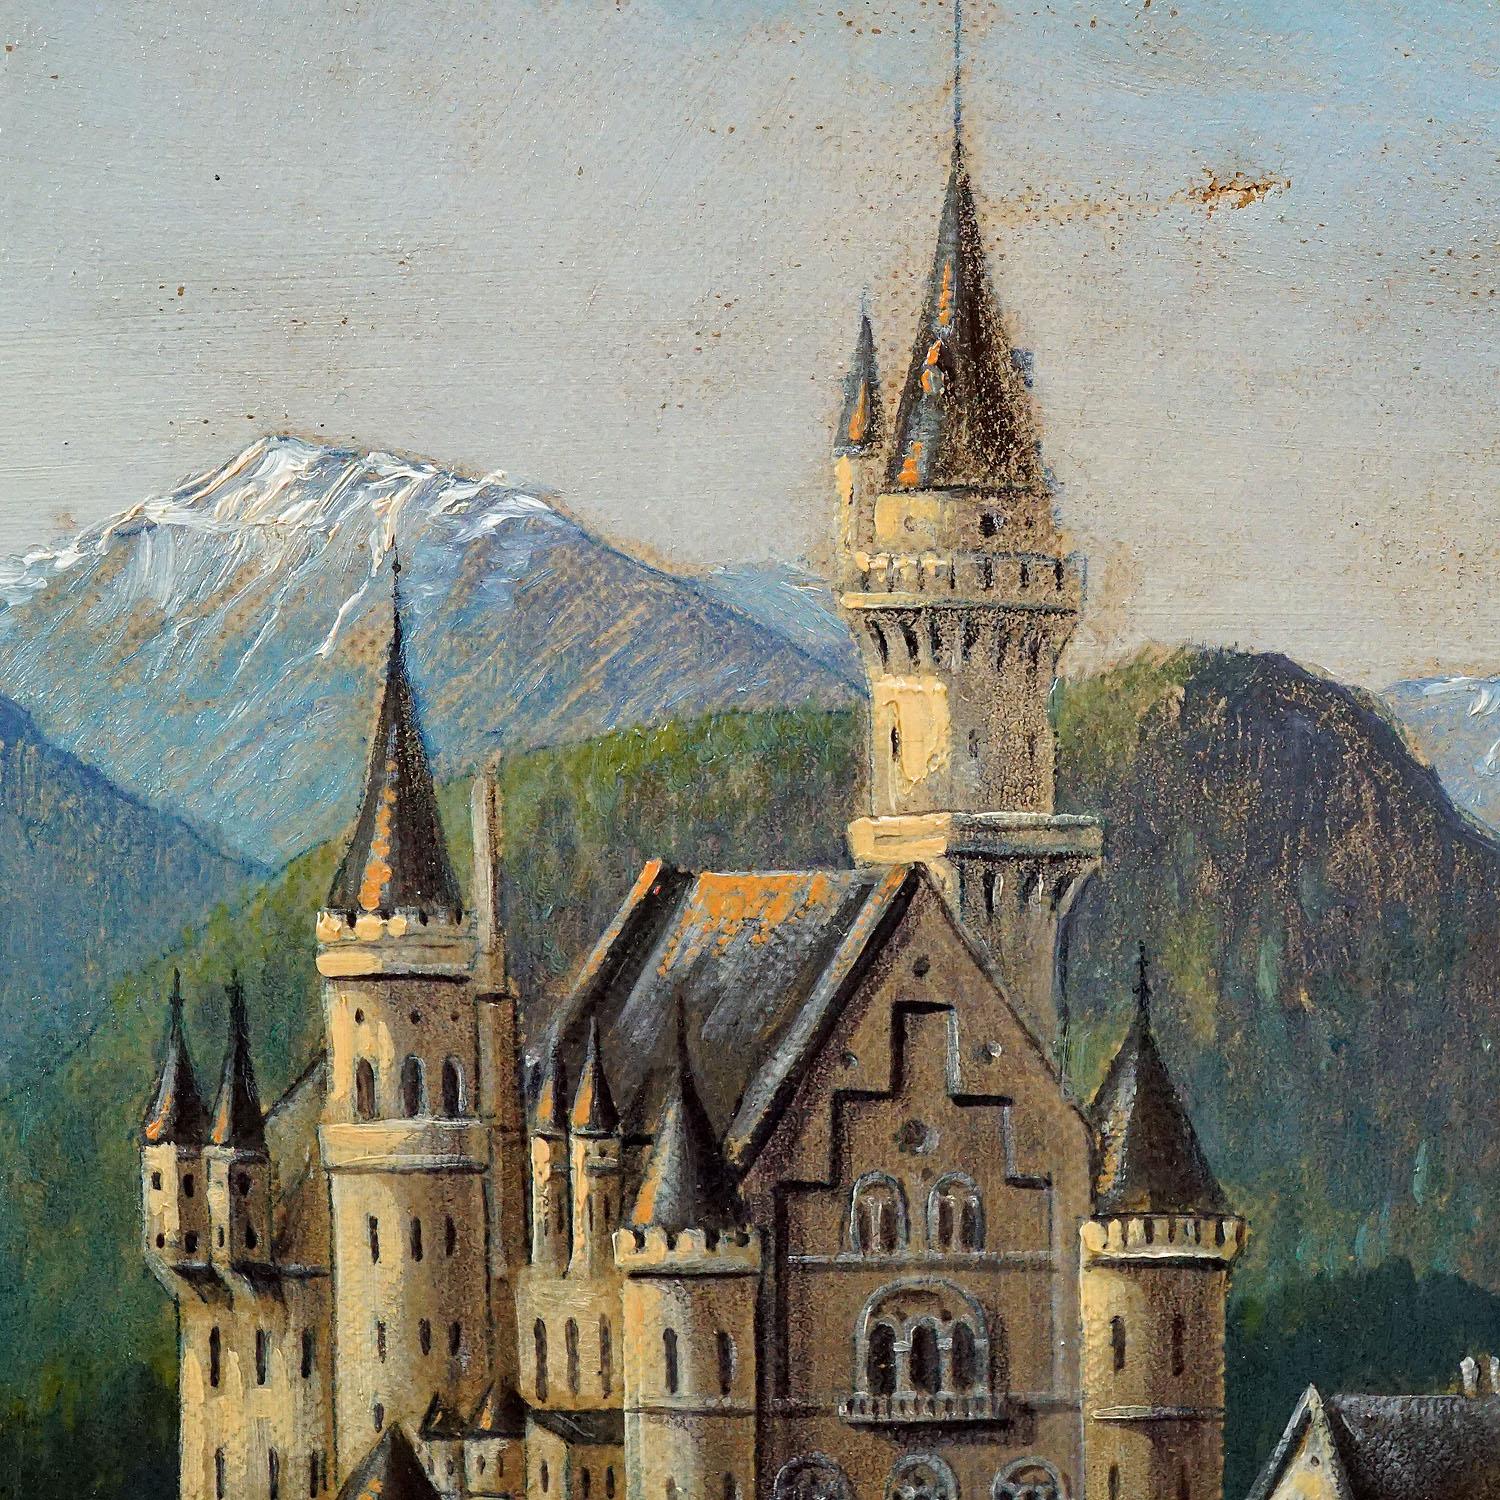 Black Forest A. Pfisterer, the Fairytale Castle Neuschwanstein, 1896